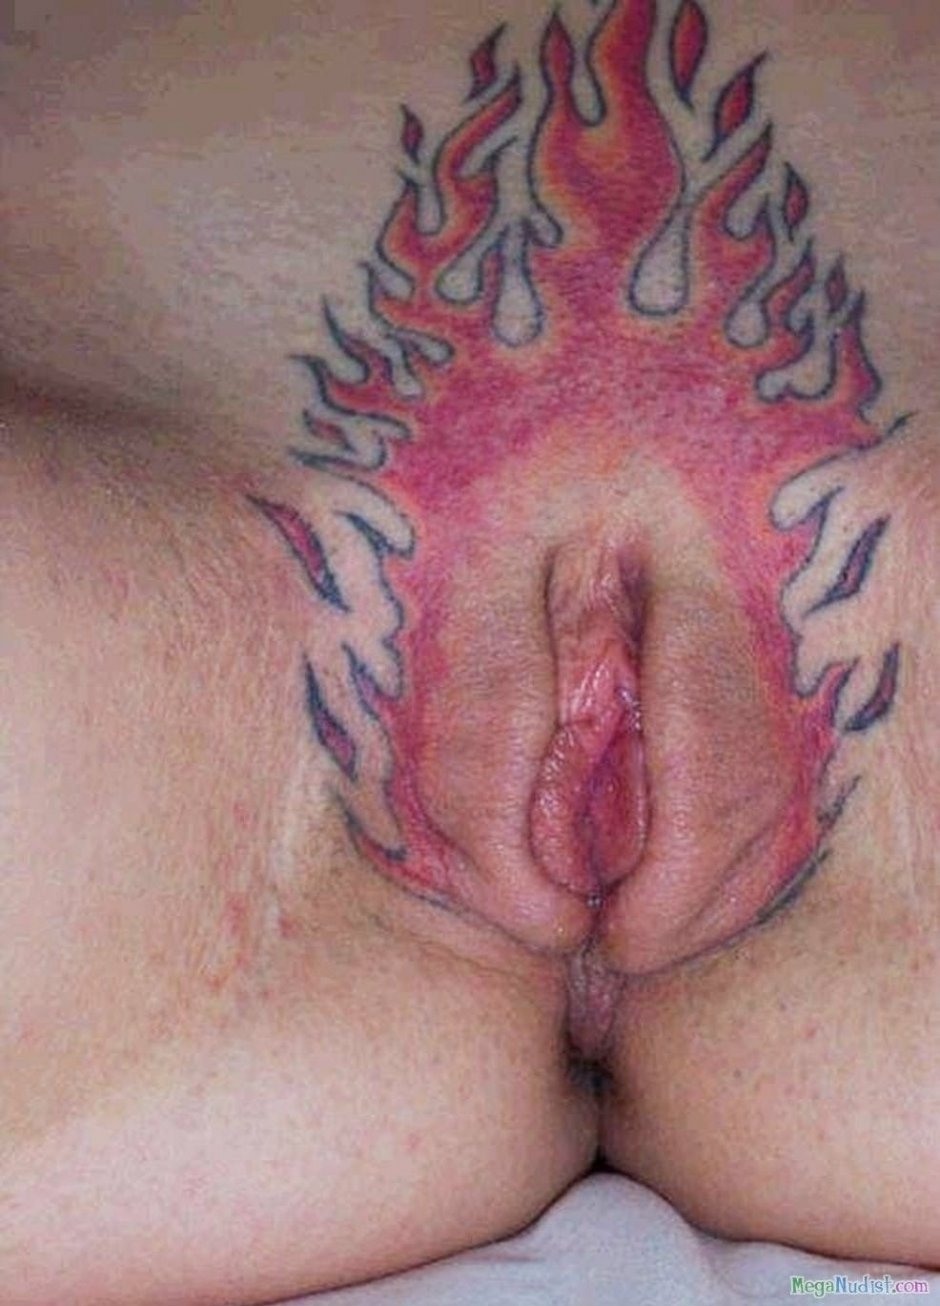 Tattoos on the vigina